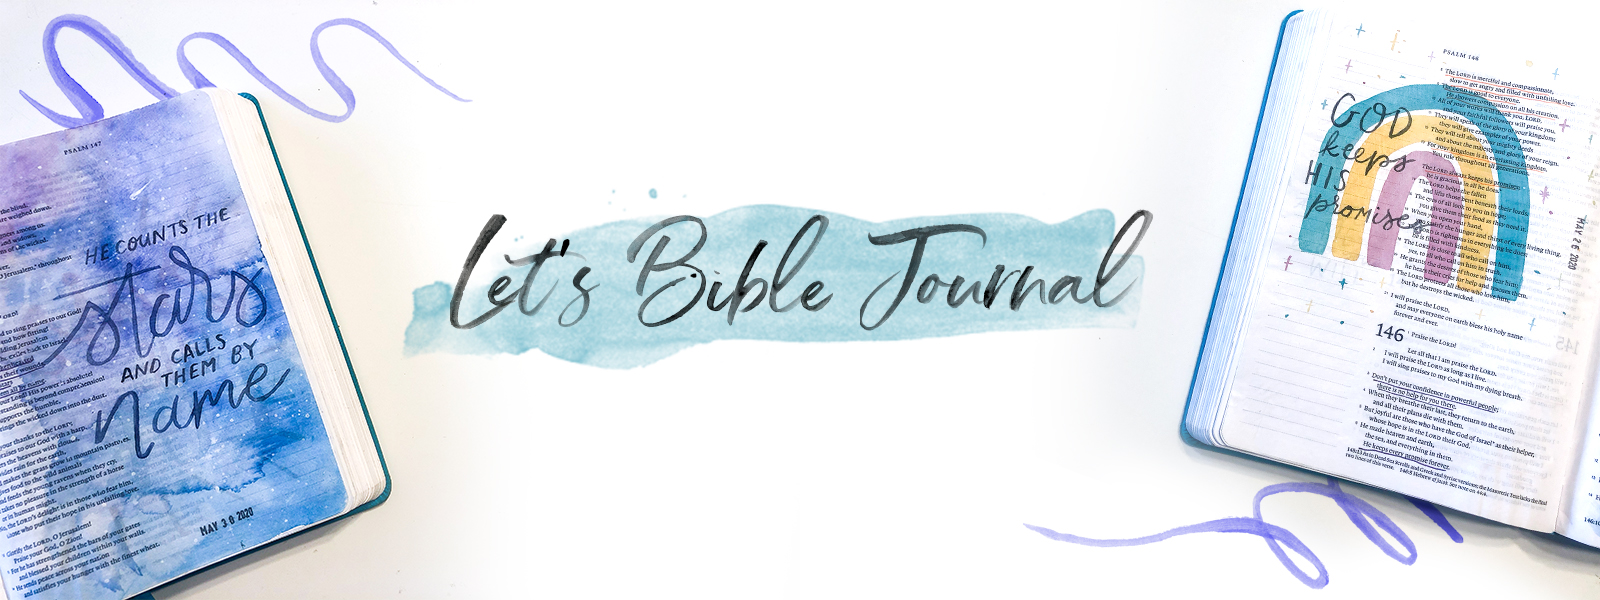 Let's Bible Journal - N E W L I F E